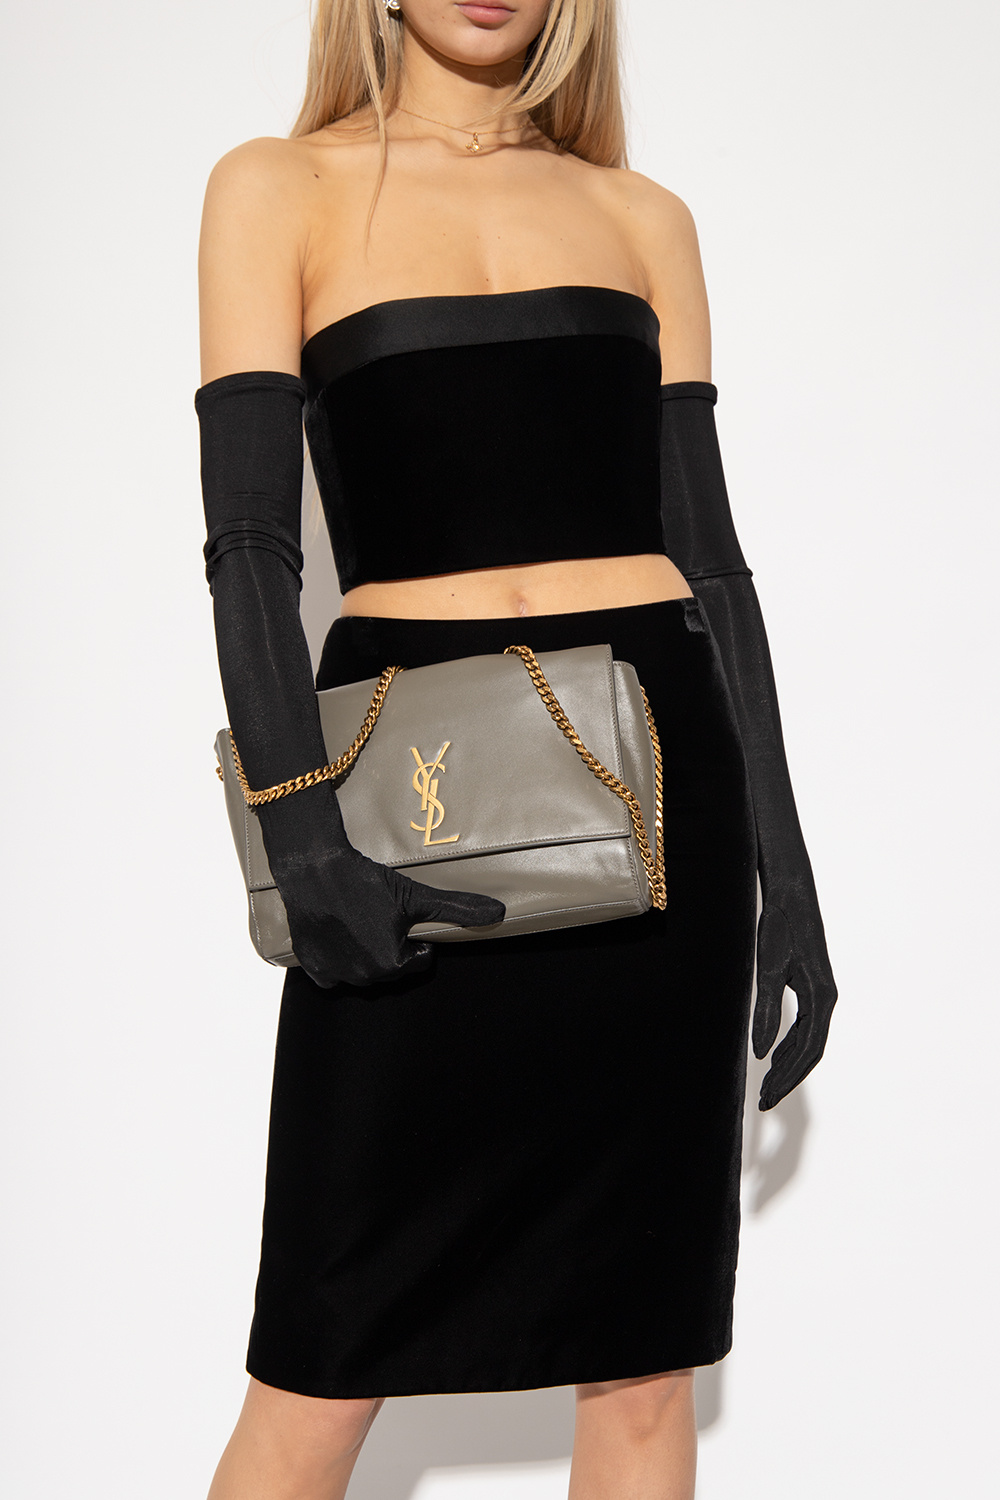 SAINT LAURENT: Kate leather bag with logo - Brown  Saint Laurent crossbody  bags 553804 0UD7W online at